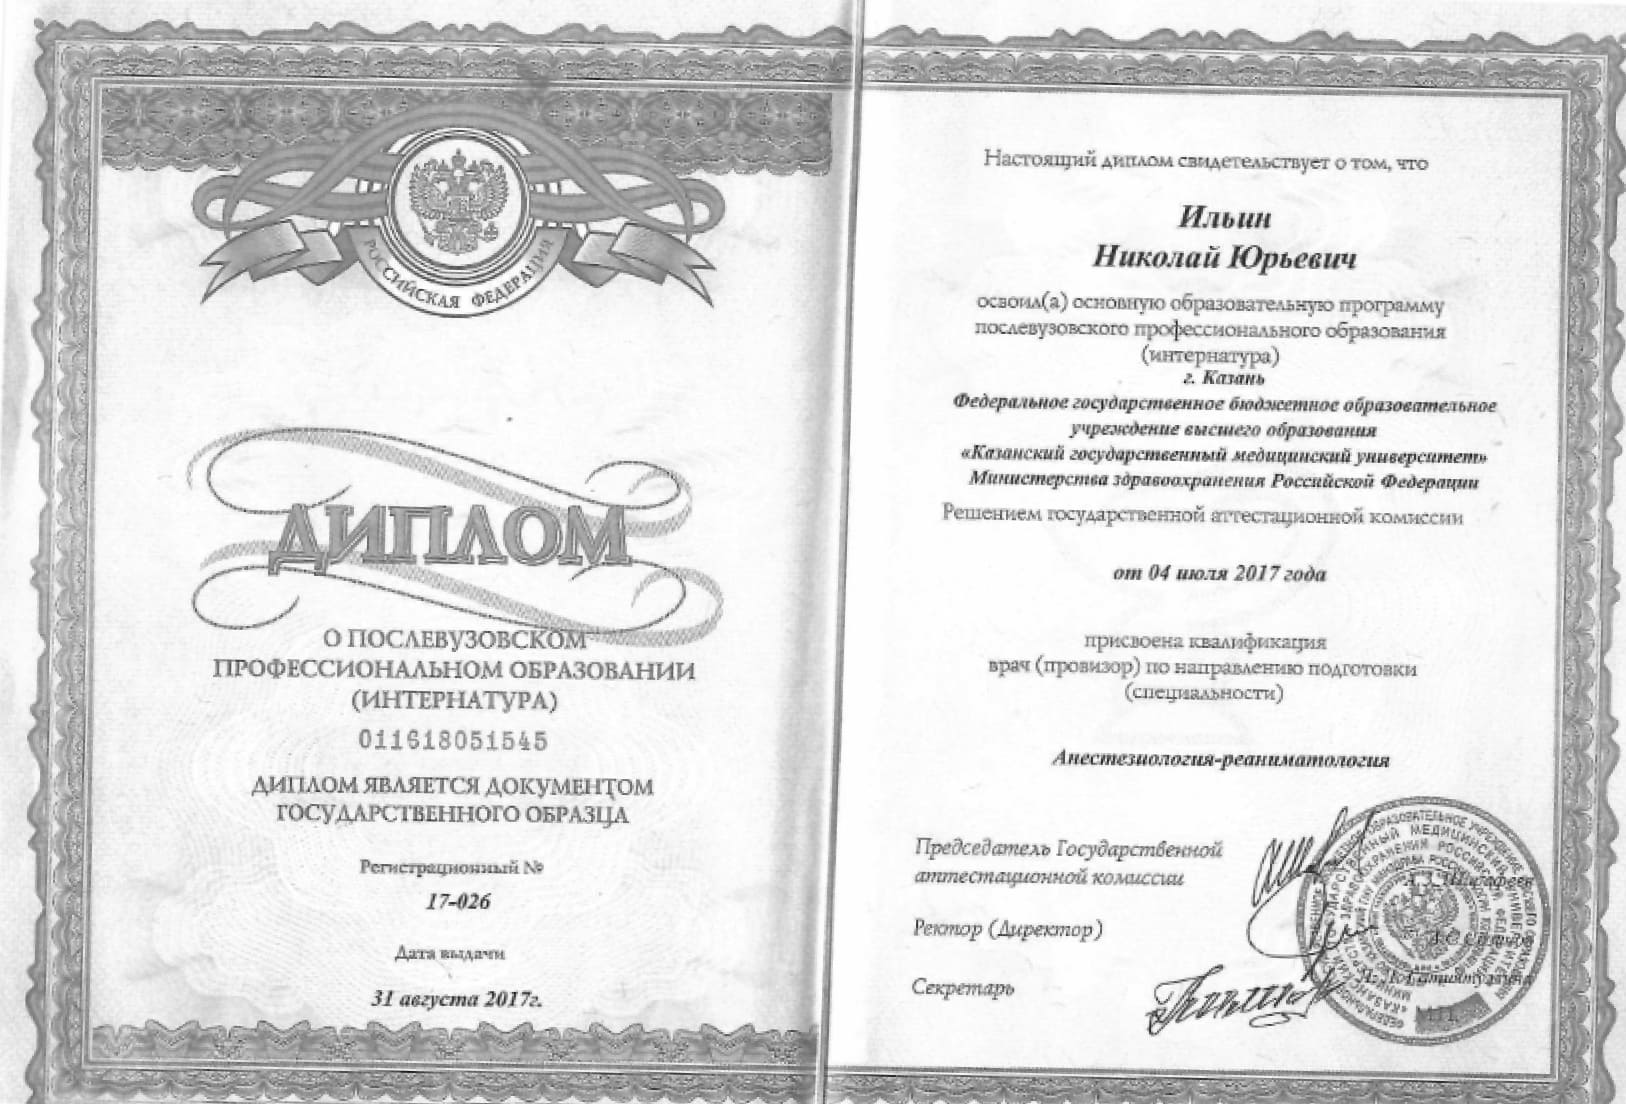 Postgraduate Vocational Education Diploma 